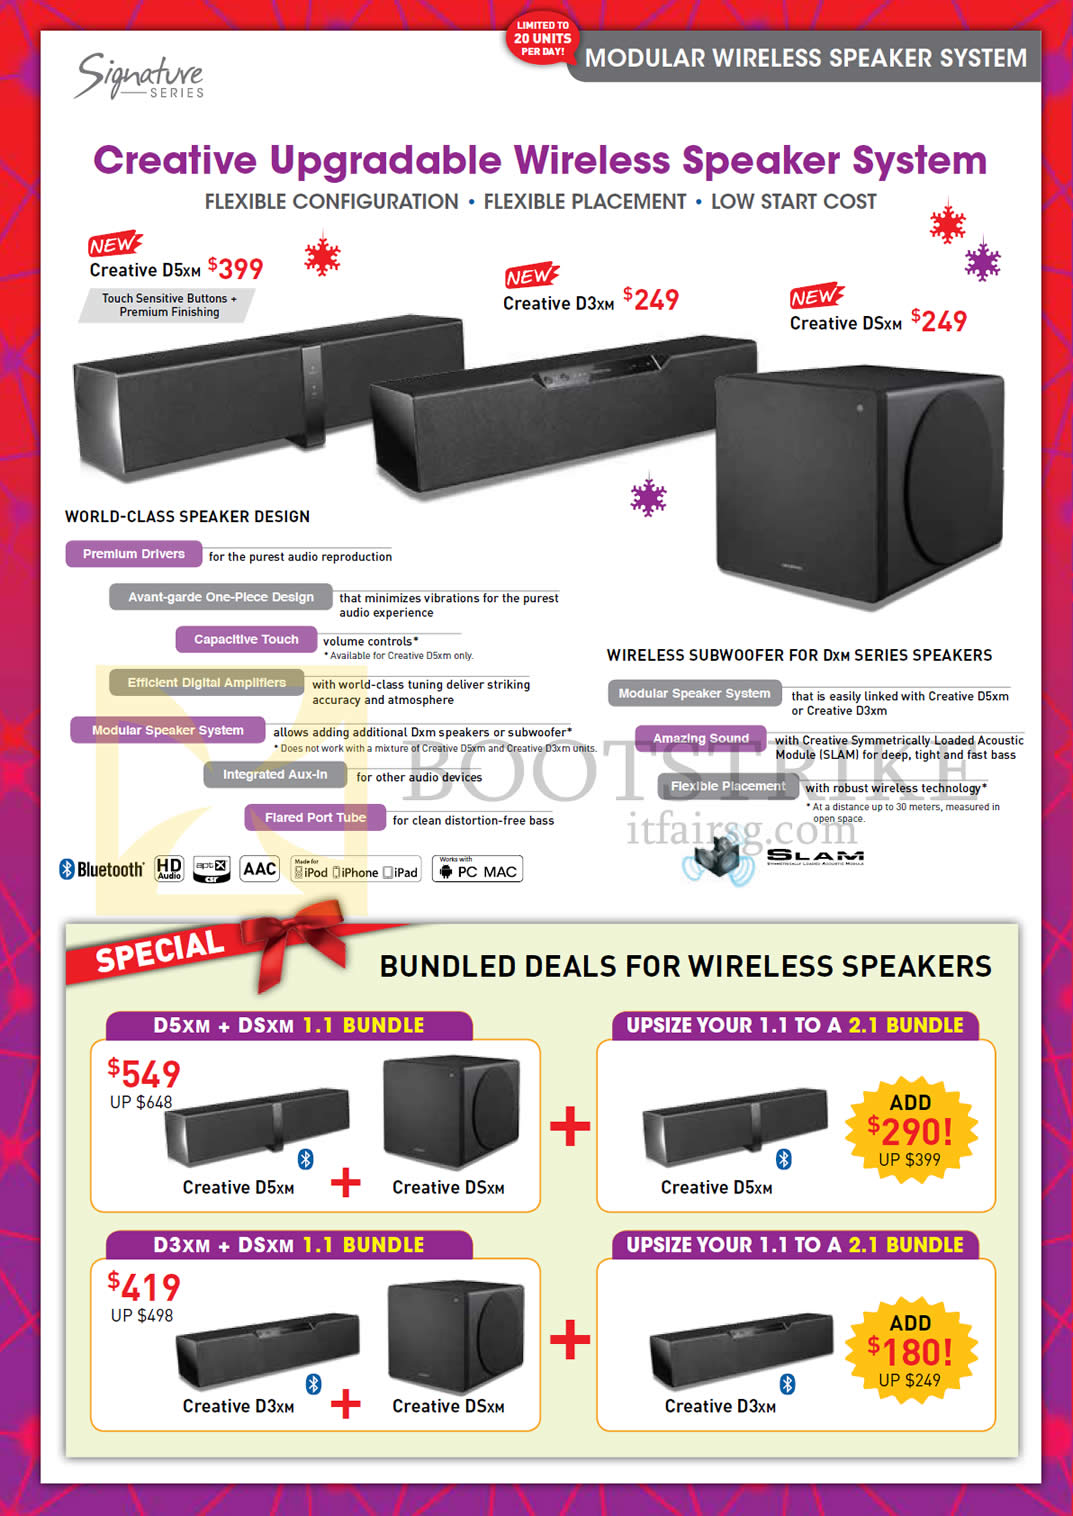 SITEX 2013 price list image brochure of Creative Modular Wireless Speaker System D5xm D3xm DSxm, Bundles